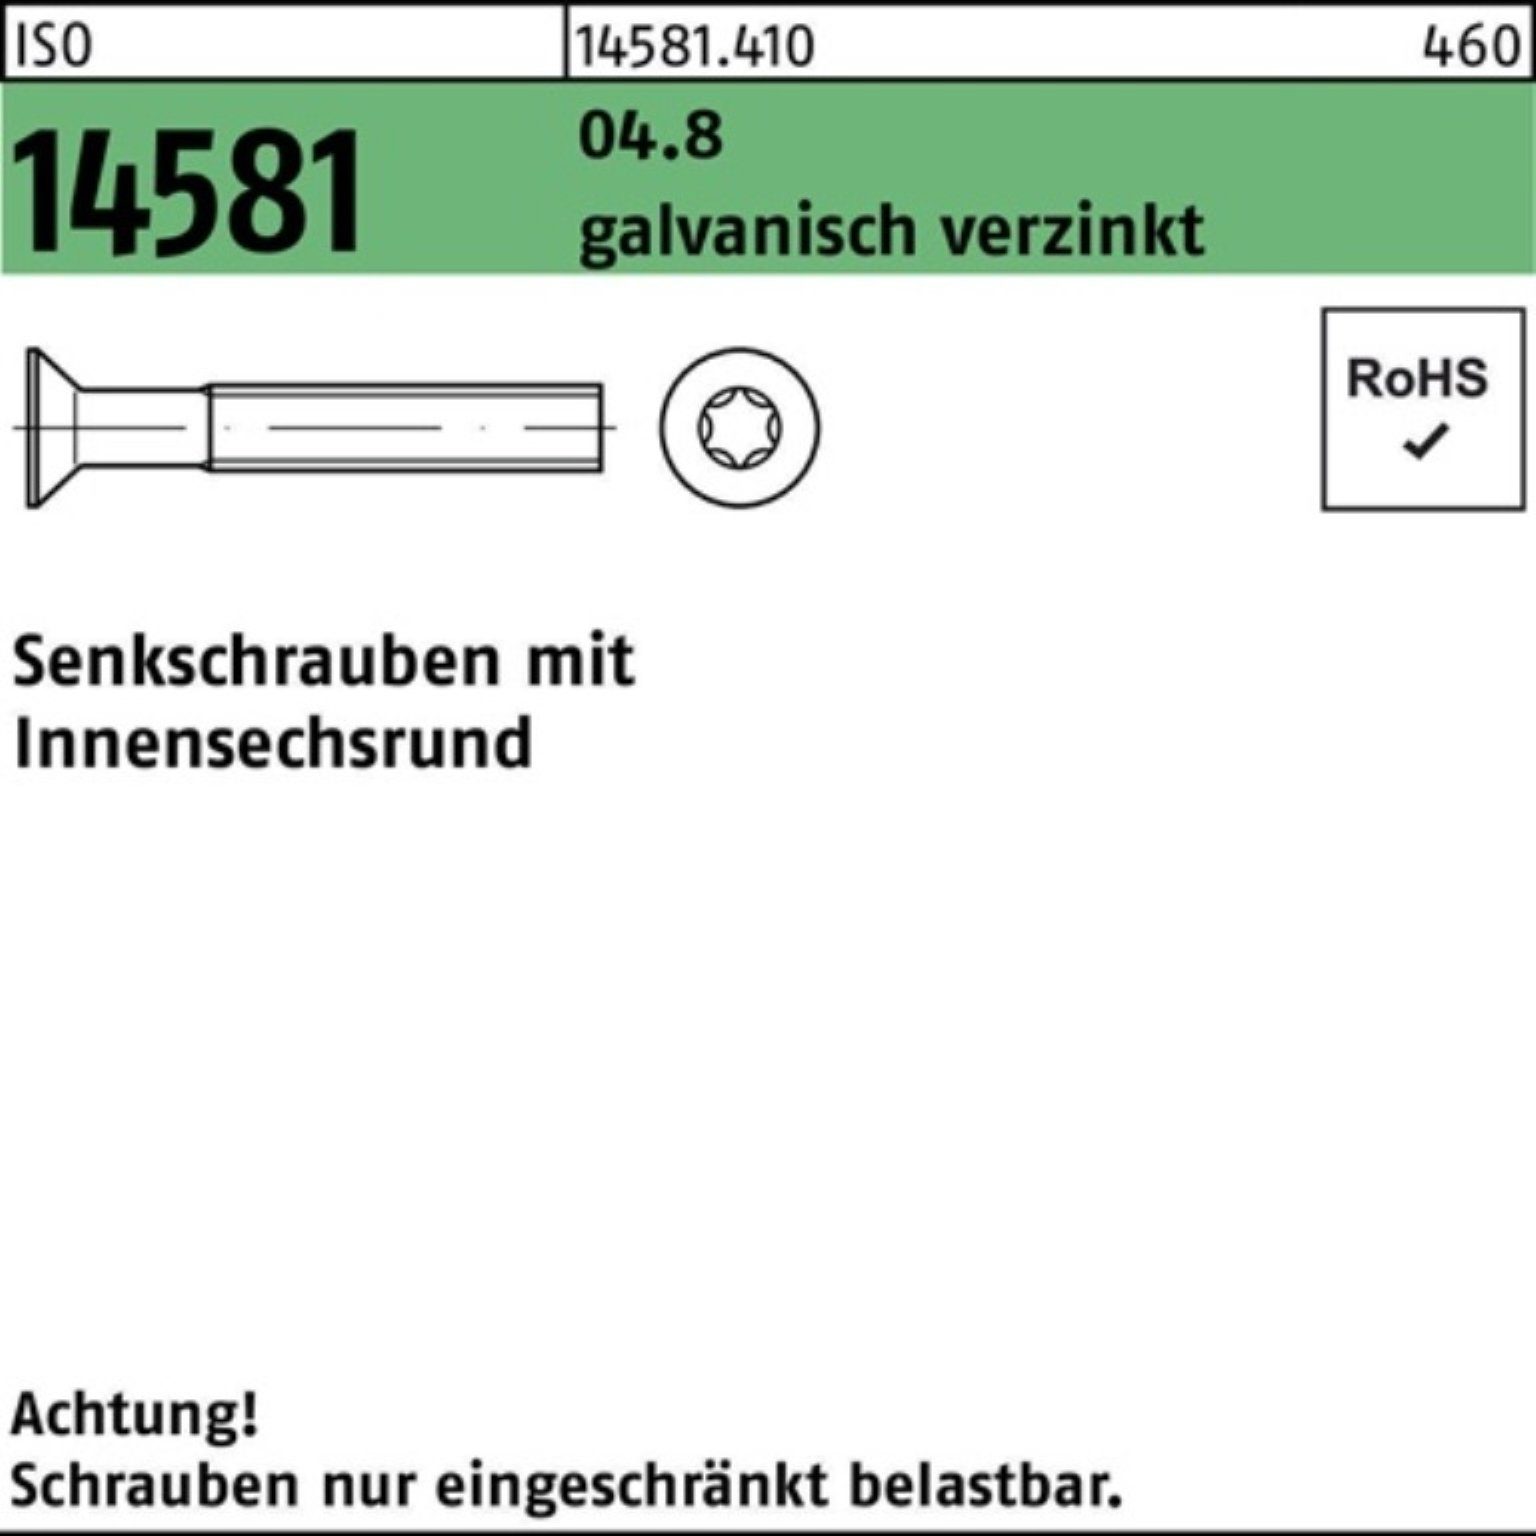 galv.verz. Reyher Senkschraube 2000er Pack ISO Senkschraube ISR M3x16 14581 04.8 2000S T10